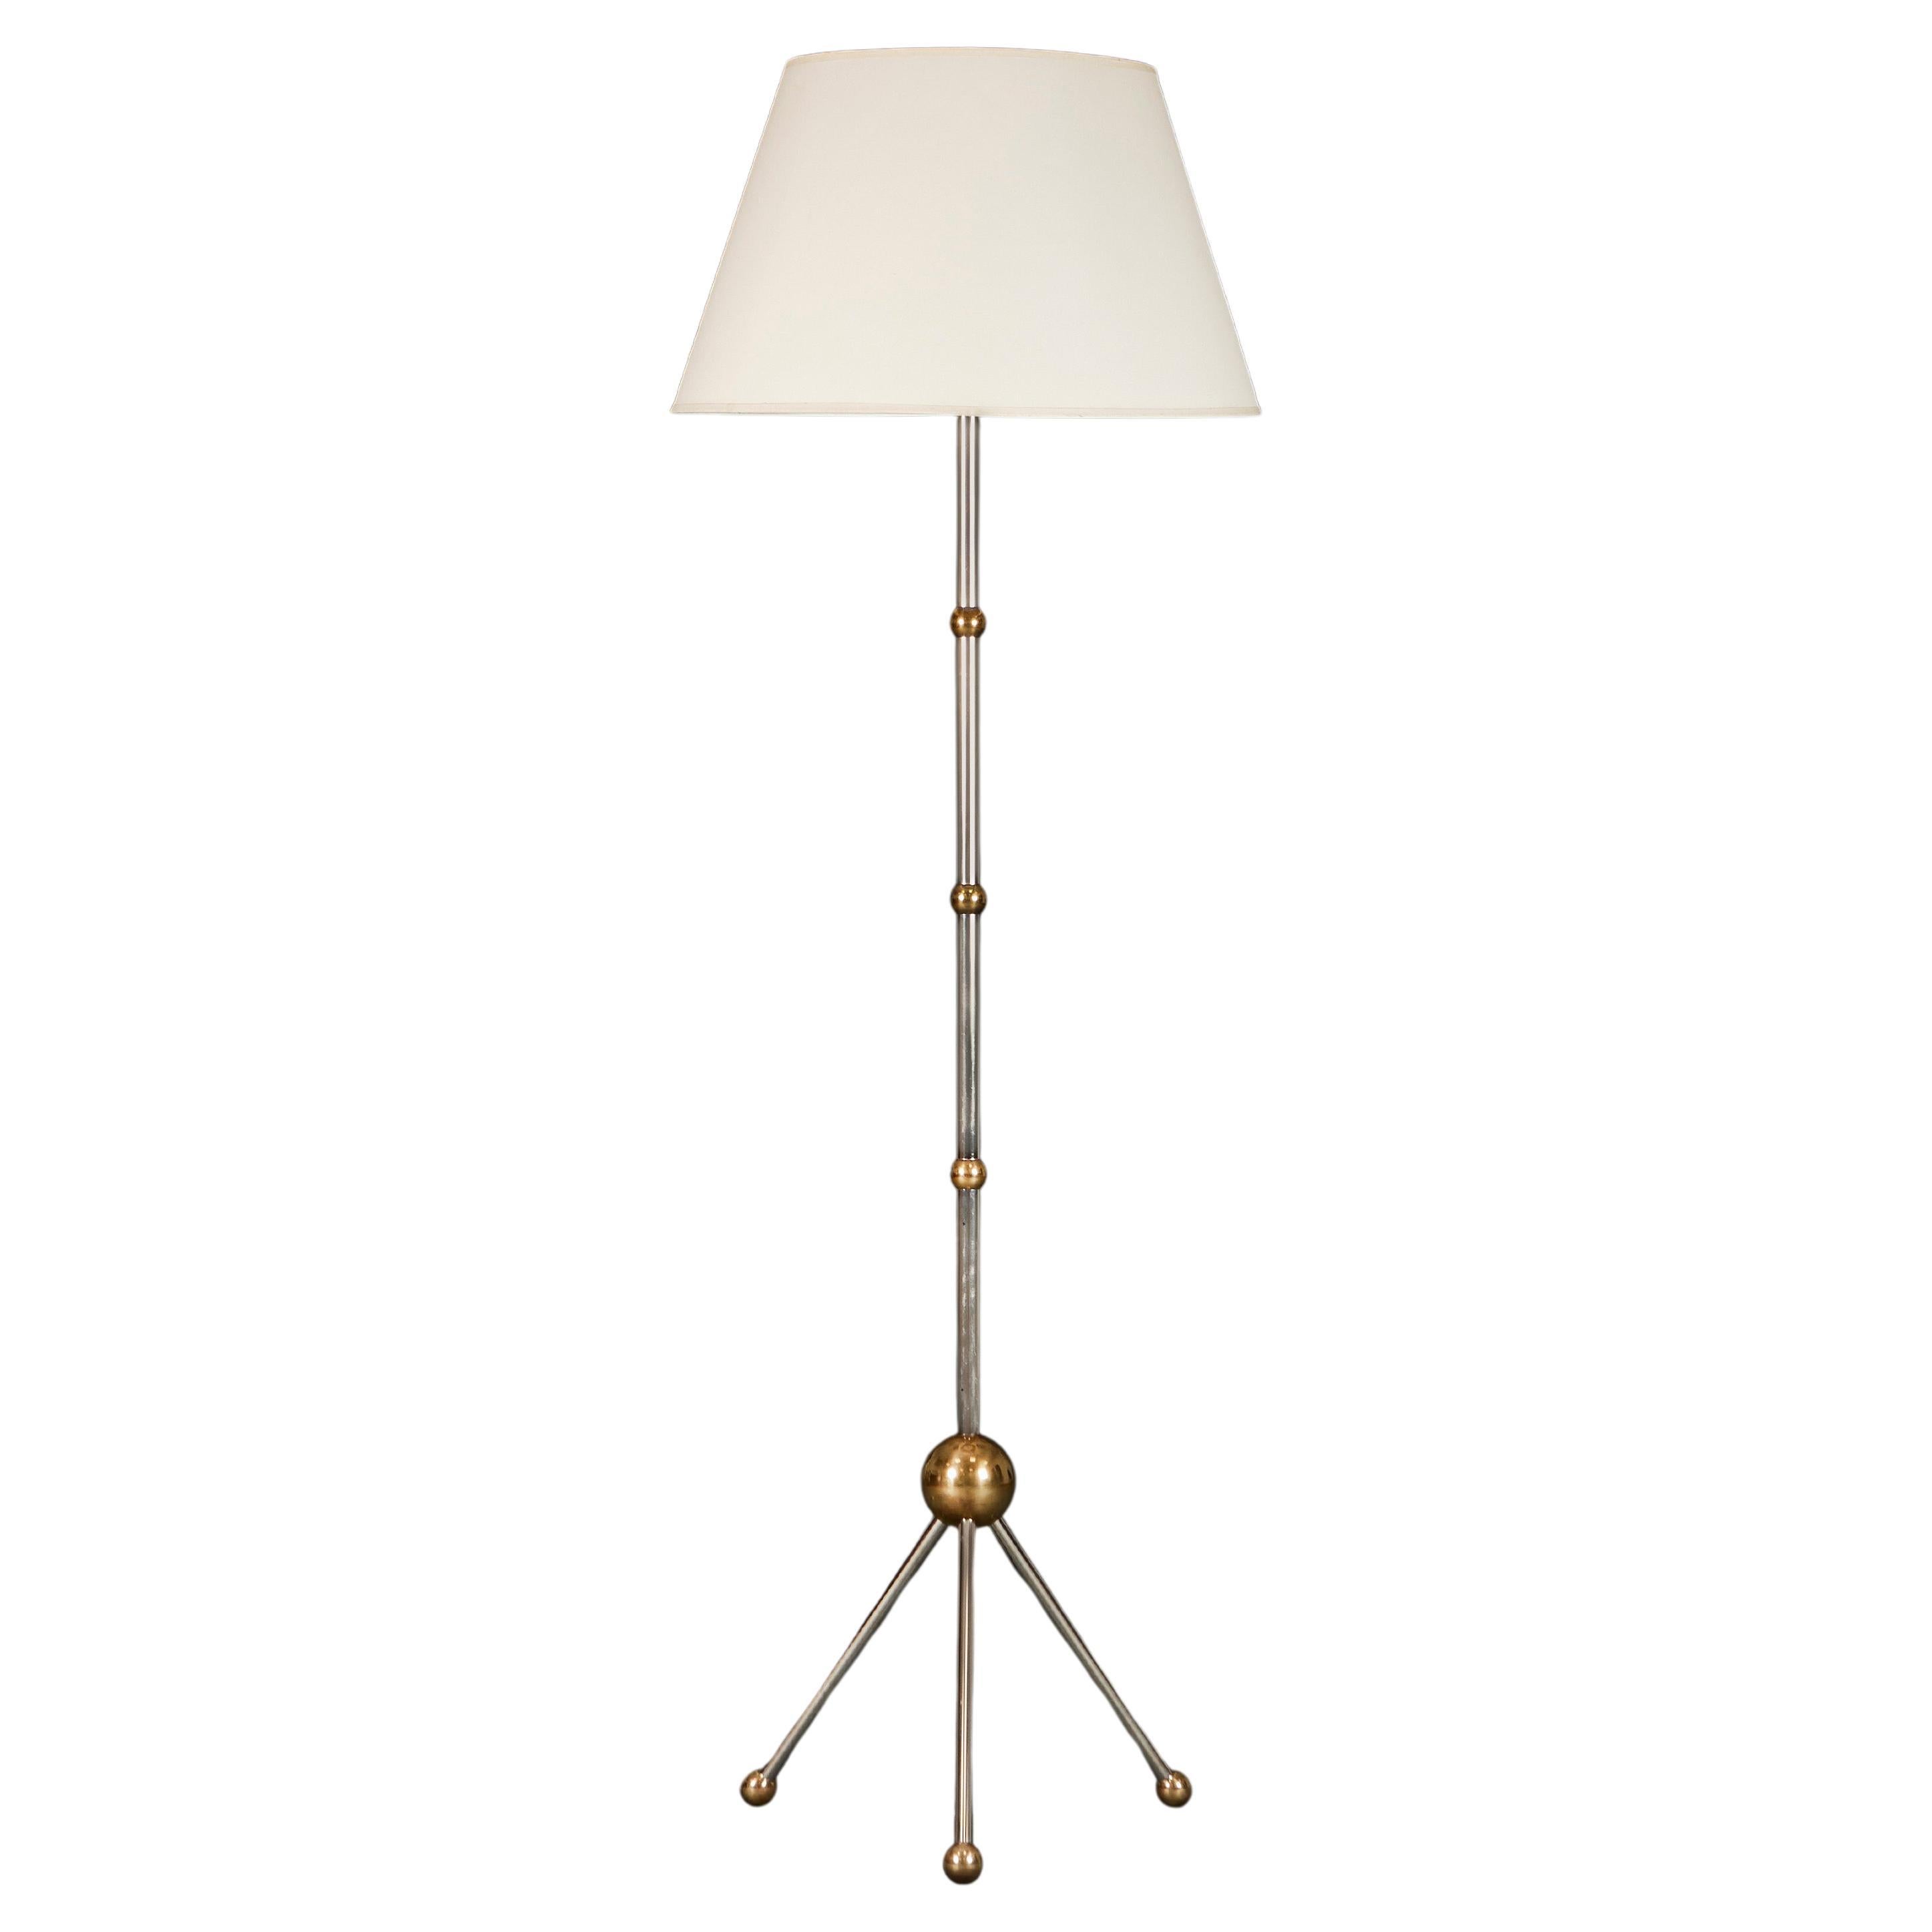 A Steel and Brass Sputnik Floor Lamp